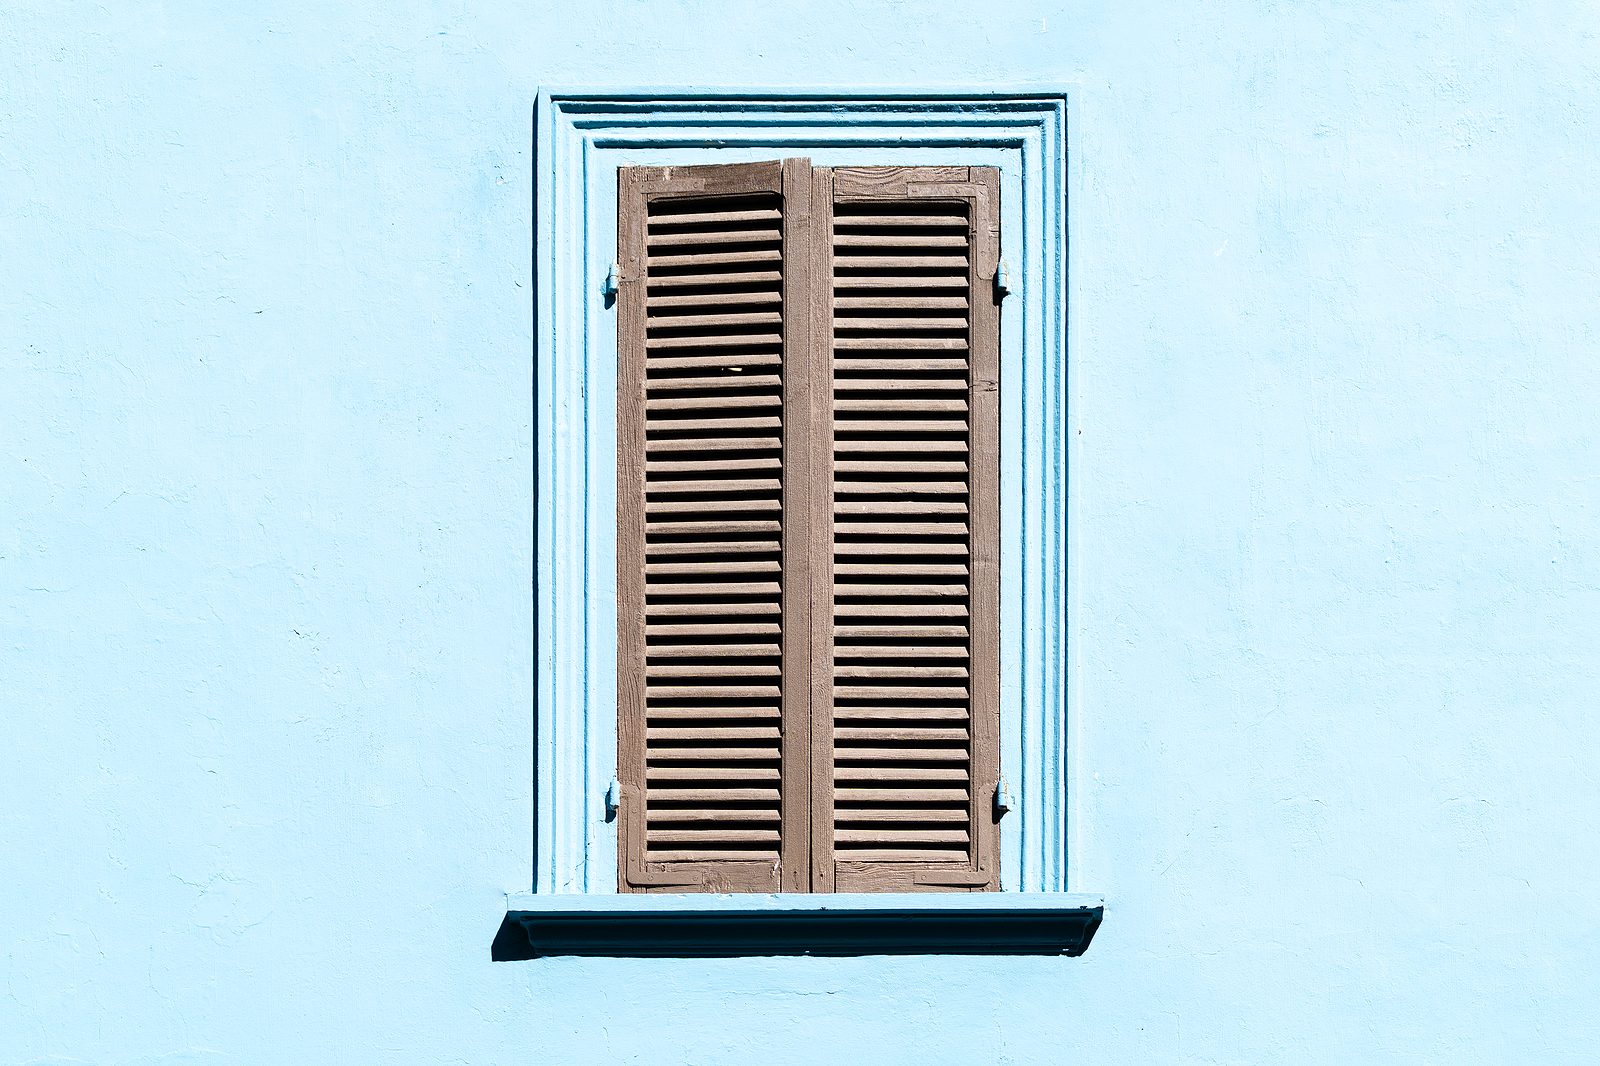 solid wood shutters - Gray shutters on the window